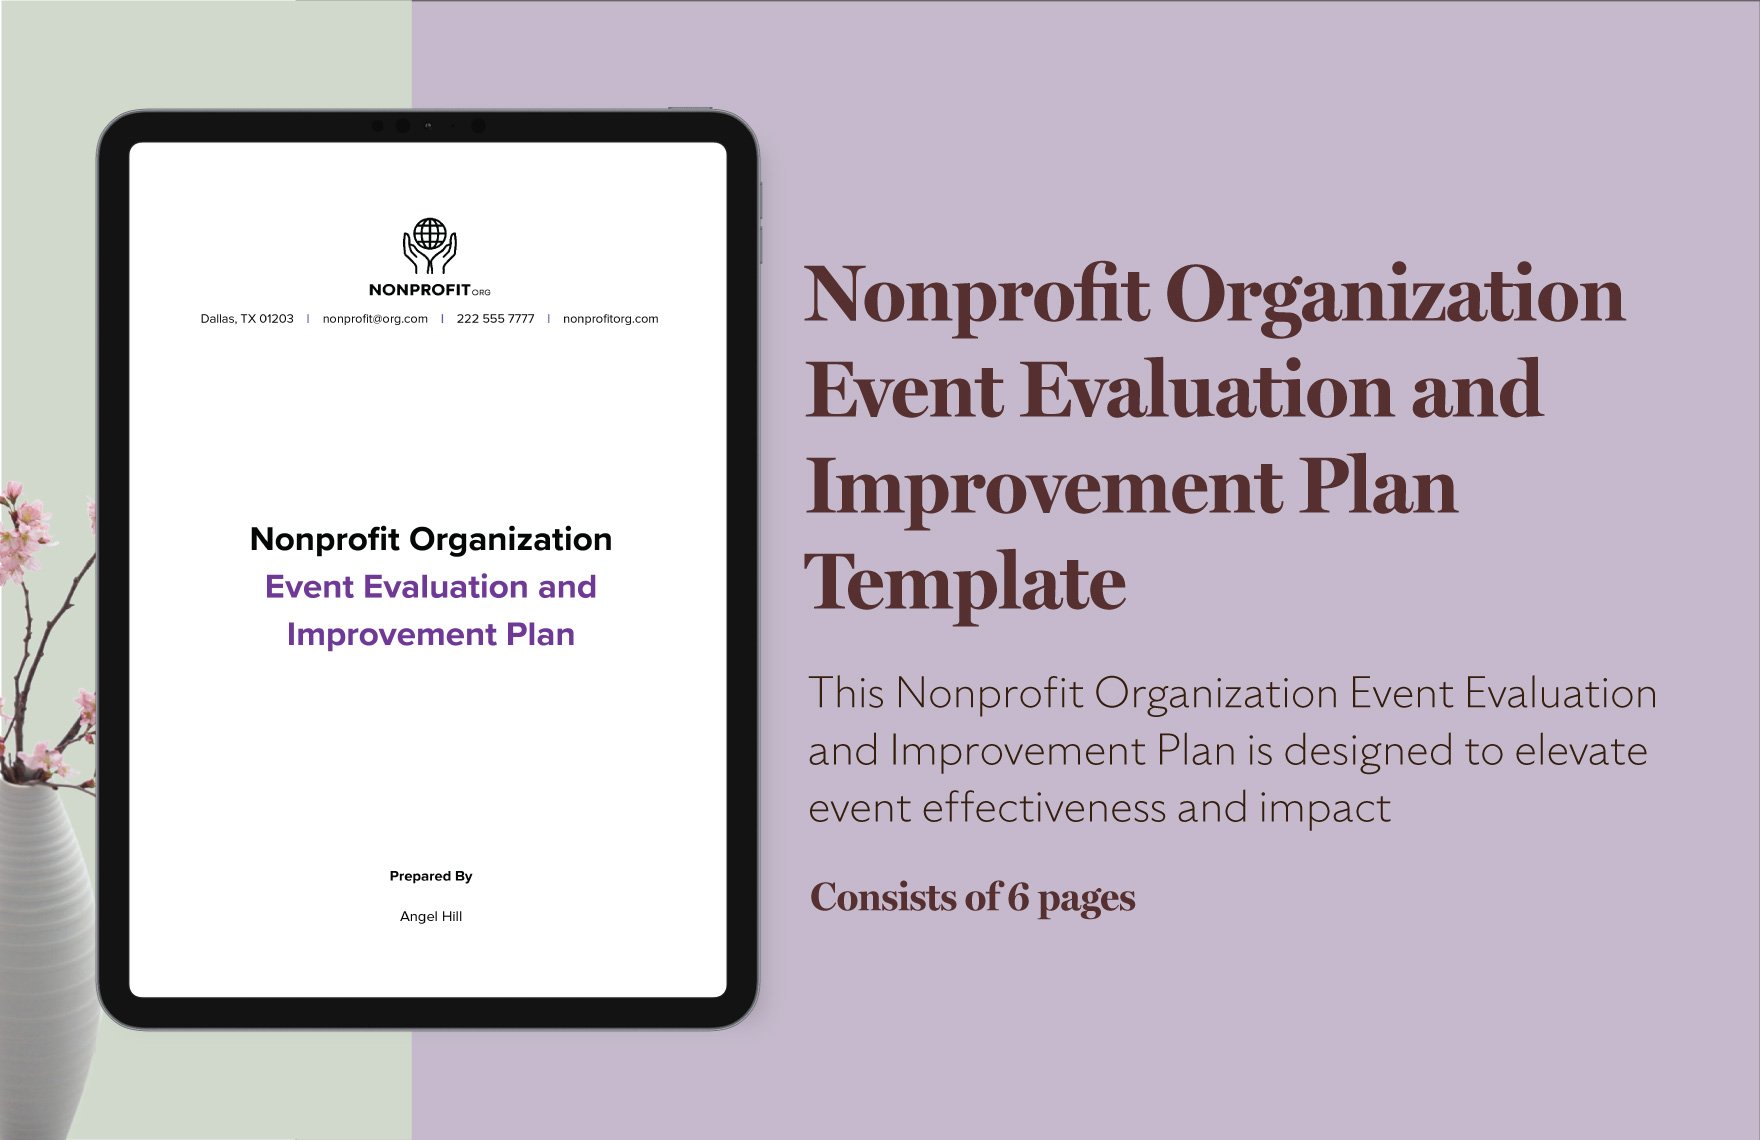 Nonprofit Organization Event Evaluation and Improvement Plan Template